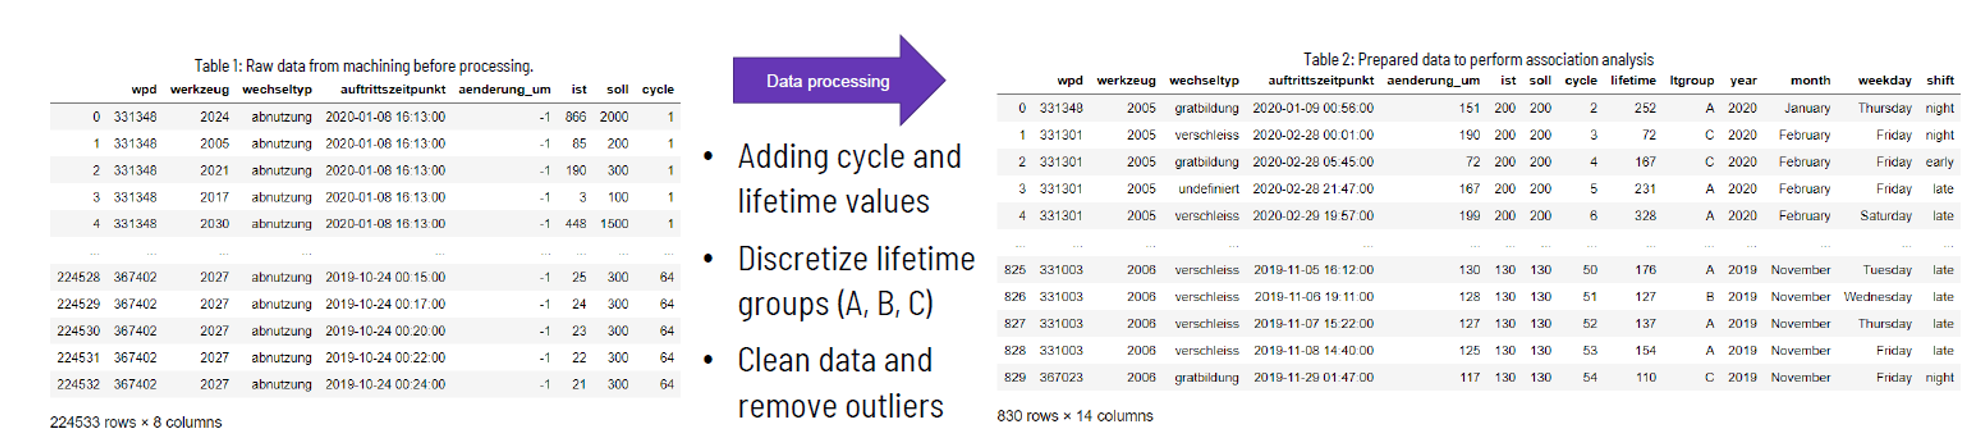 Data processing